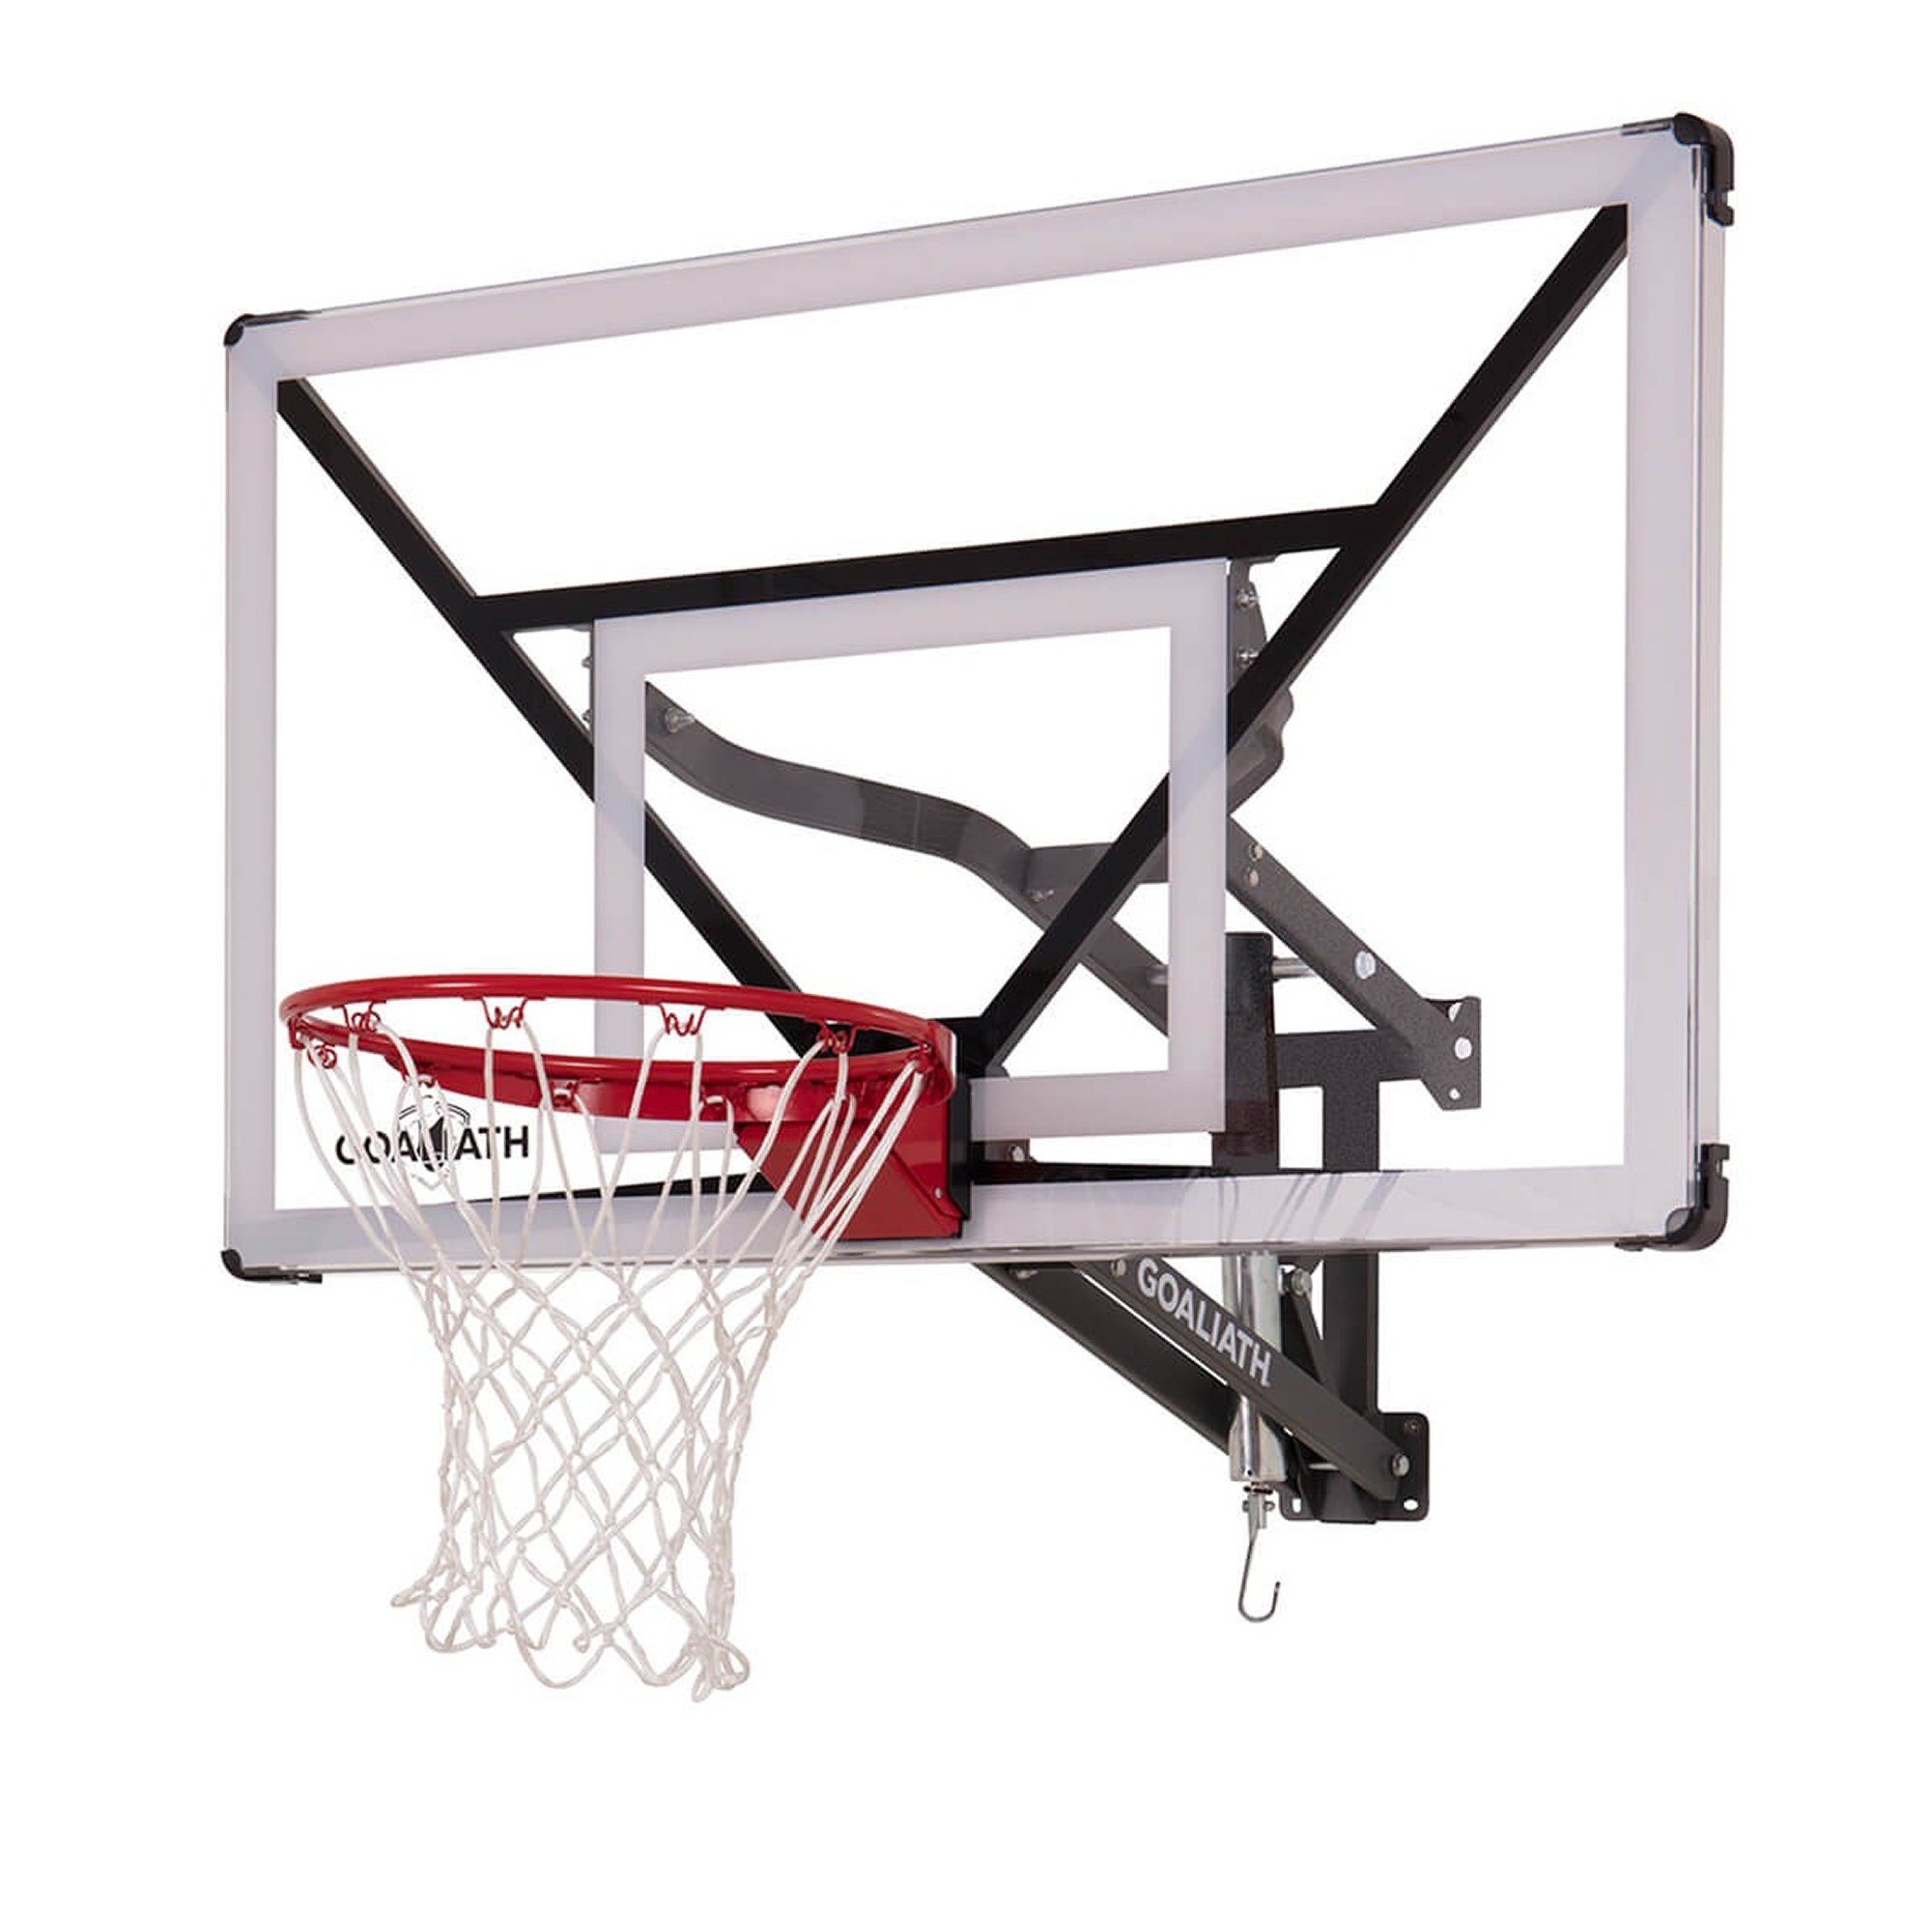 Goaliath GoTek 54 Wallmount Basketball Backboard